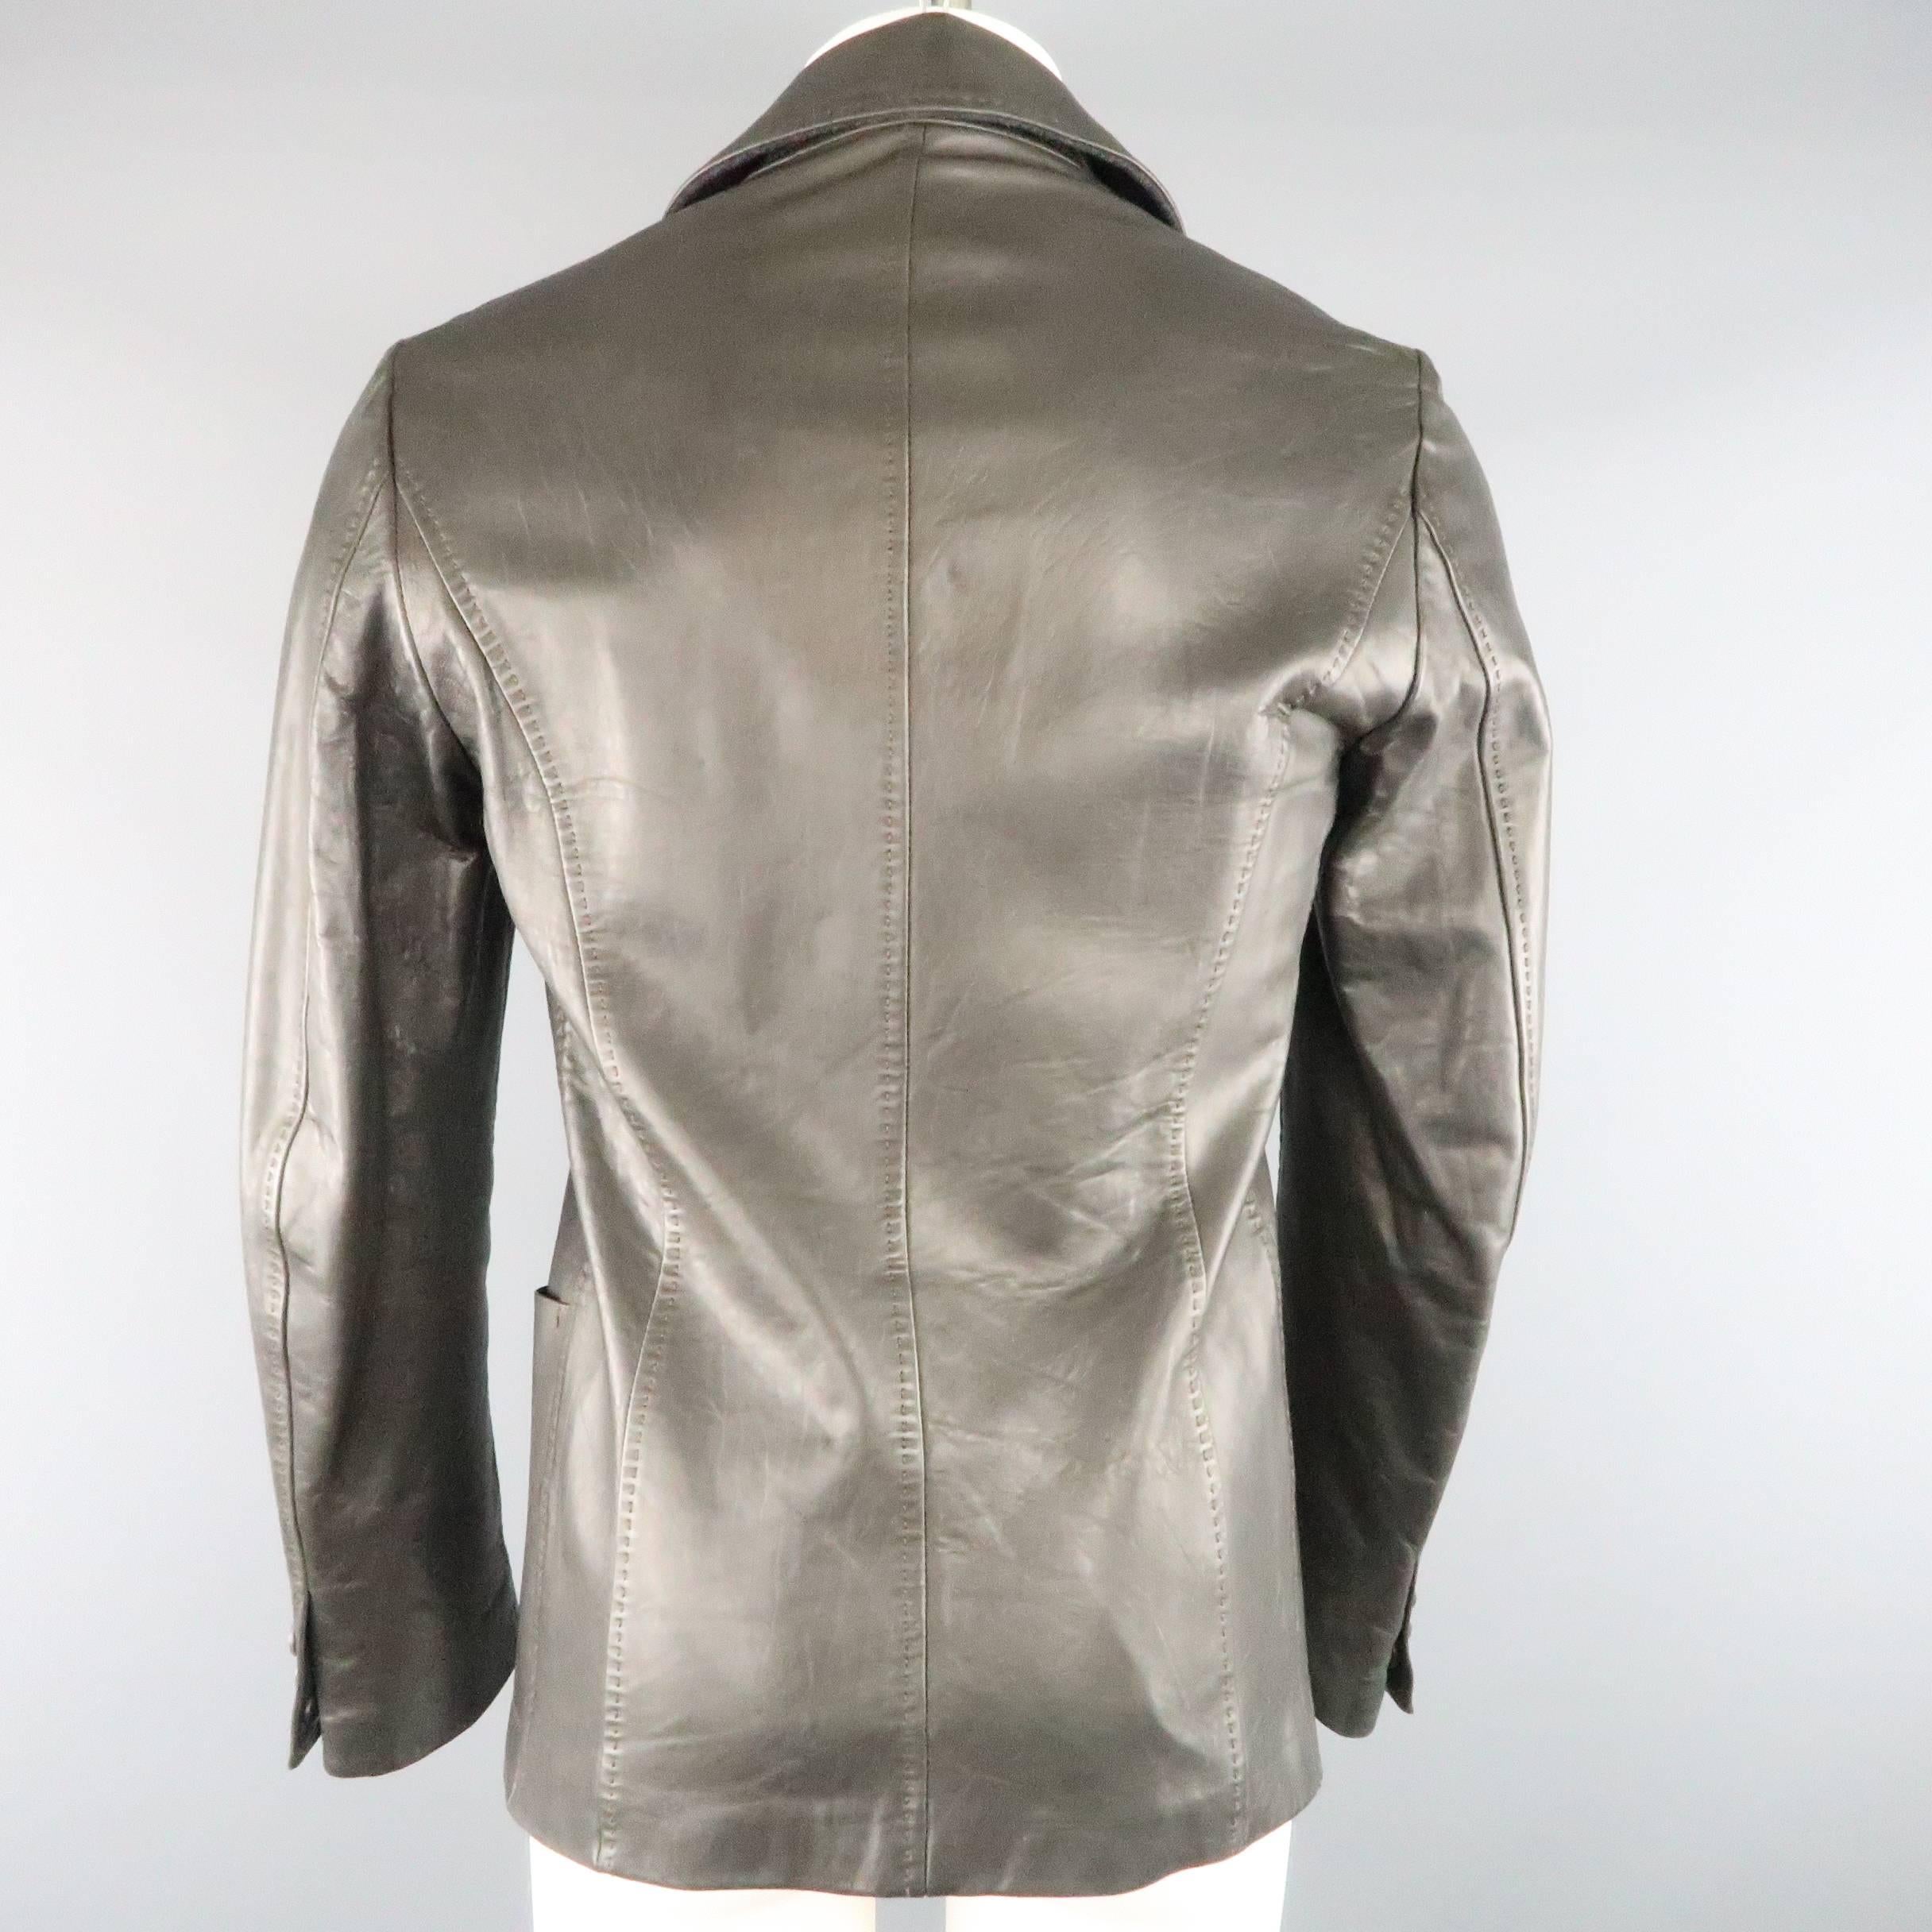  JIL SANDER Leather Jacket 36 Charcoal Top Stitch Sport Coat  2